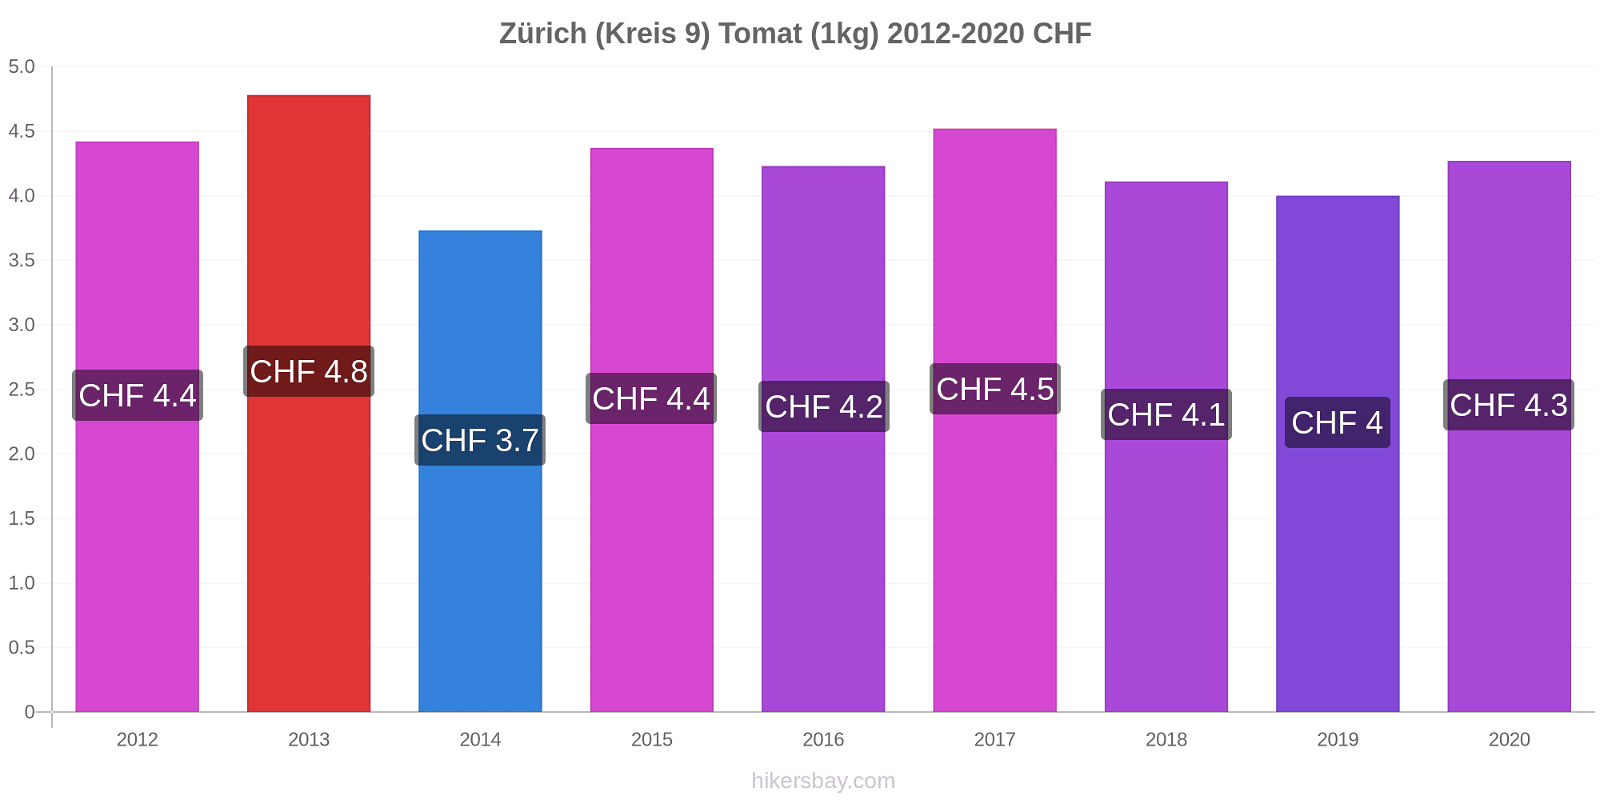 Zürich (Kreis 9) perubahan harga Tomat (1kg) hikersbay.com